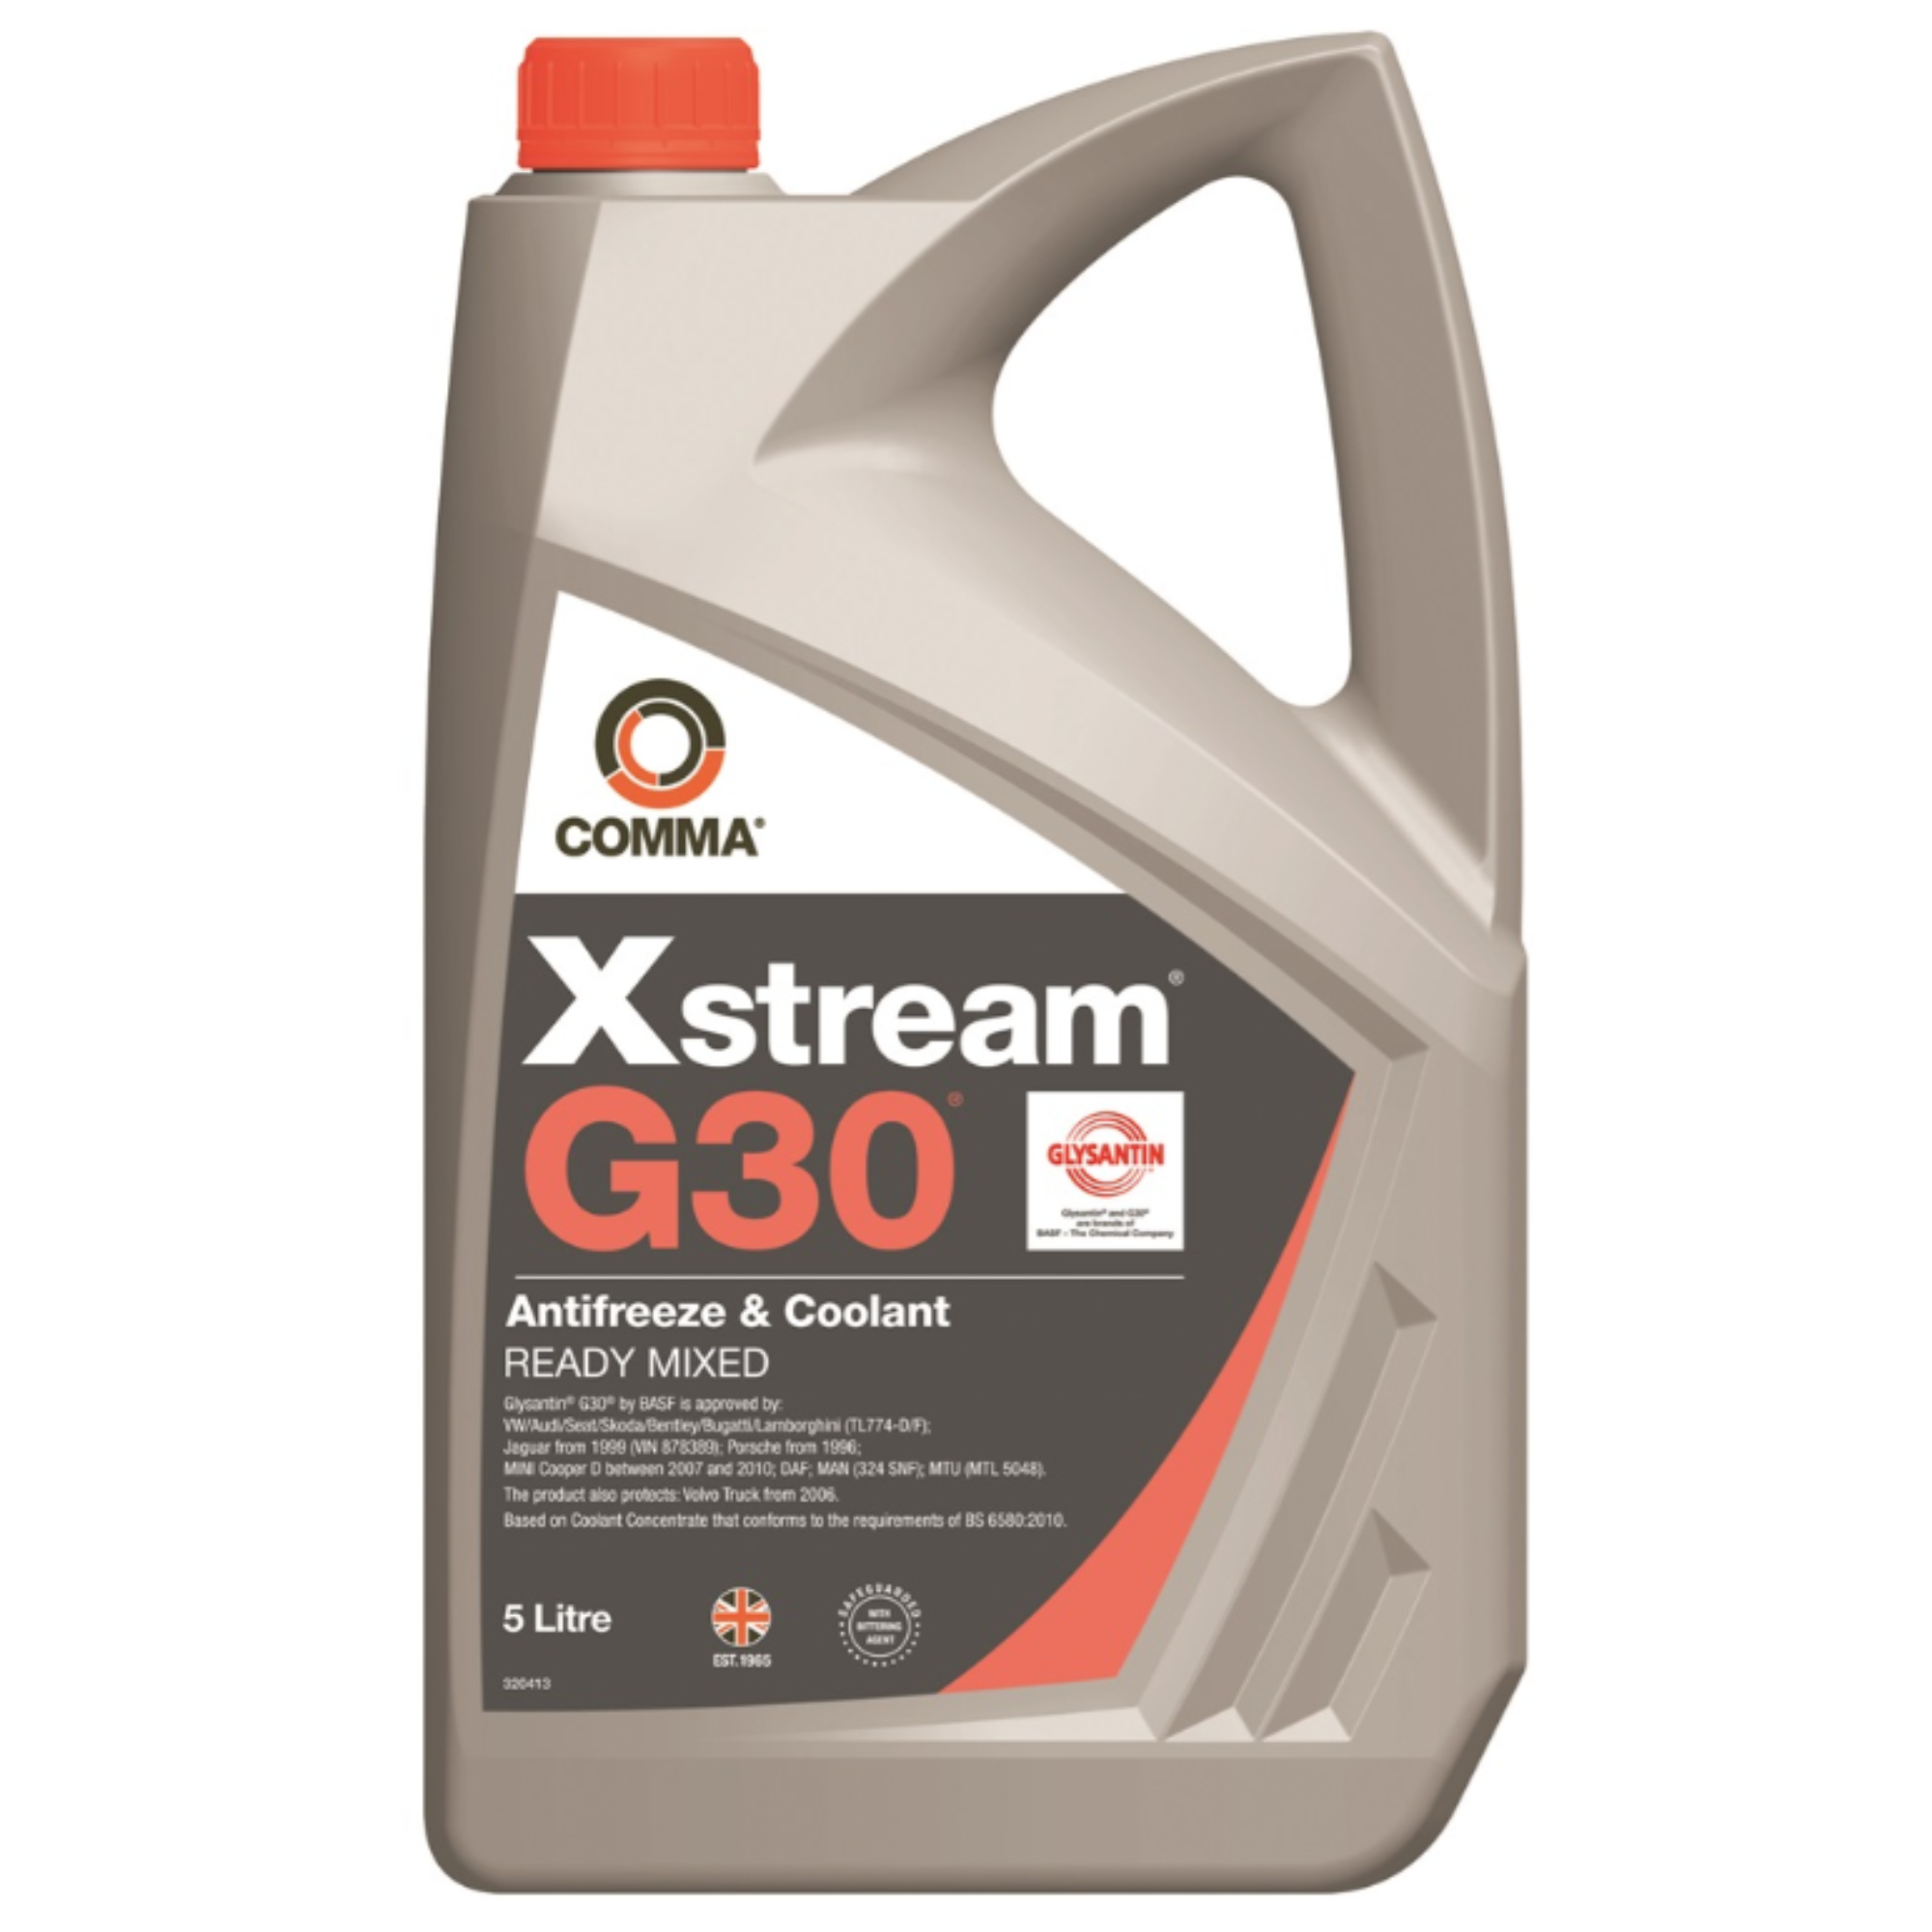 Comma XStream G30 Antifreeze & Coolant Ready To Use 5L